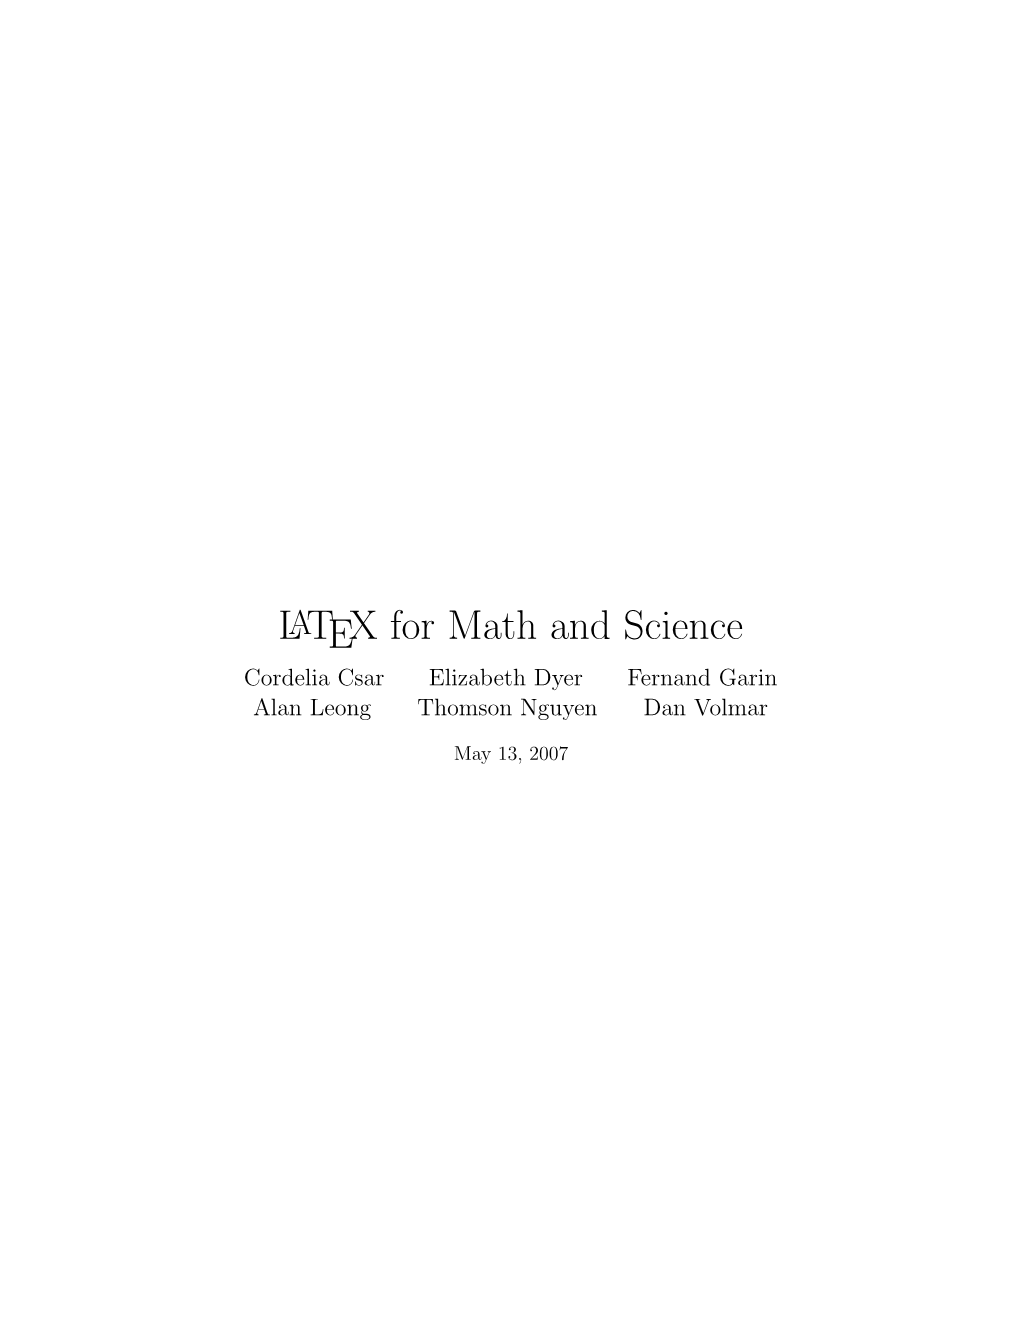 LATEX for Math and Science Cordelia Csar Elizabeth Dyer Fernand Garin Alan Leong Thomson Nguyen Dan Volmar